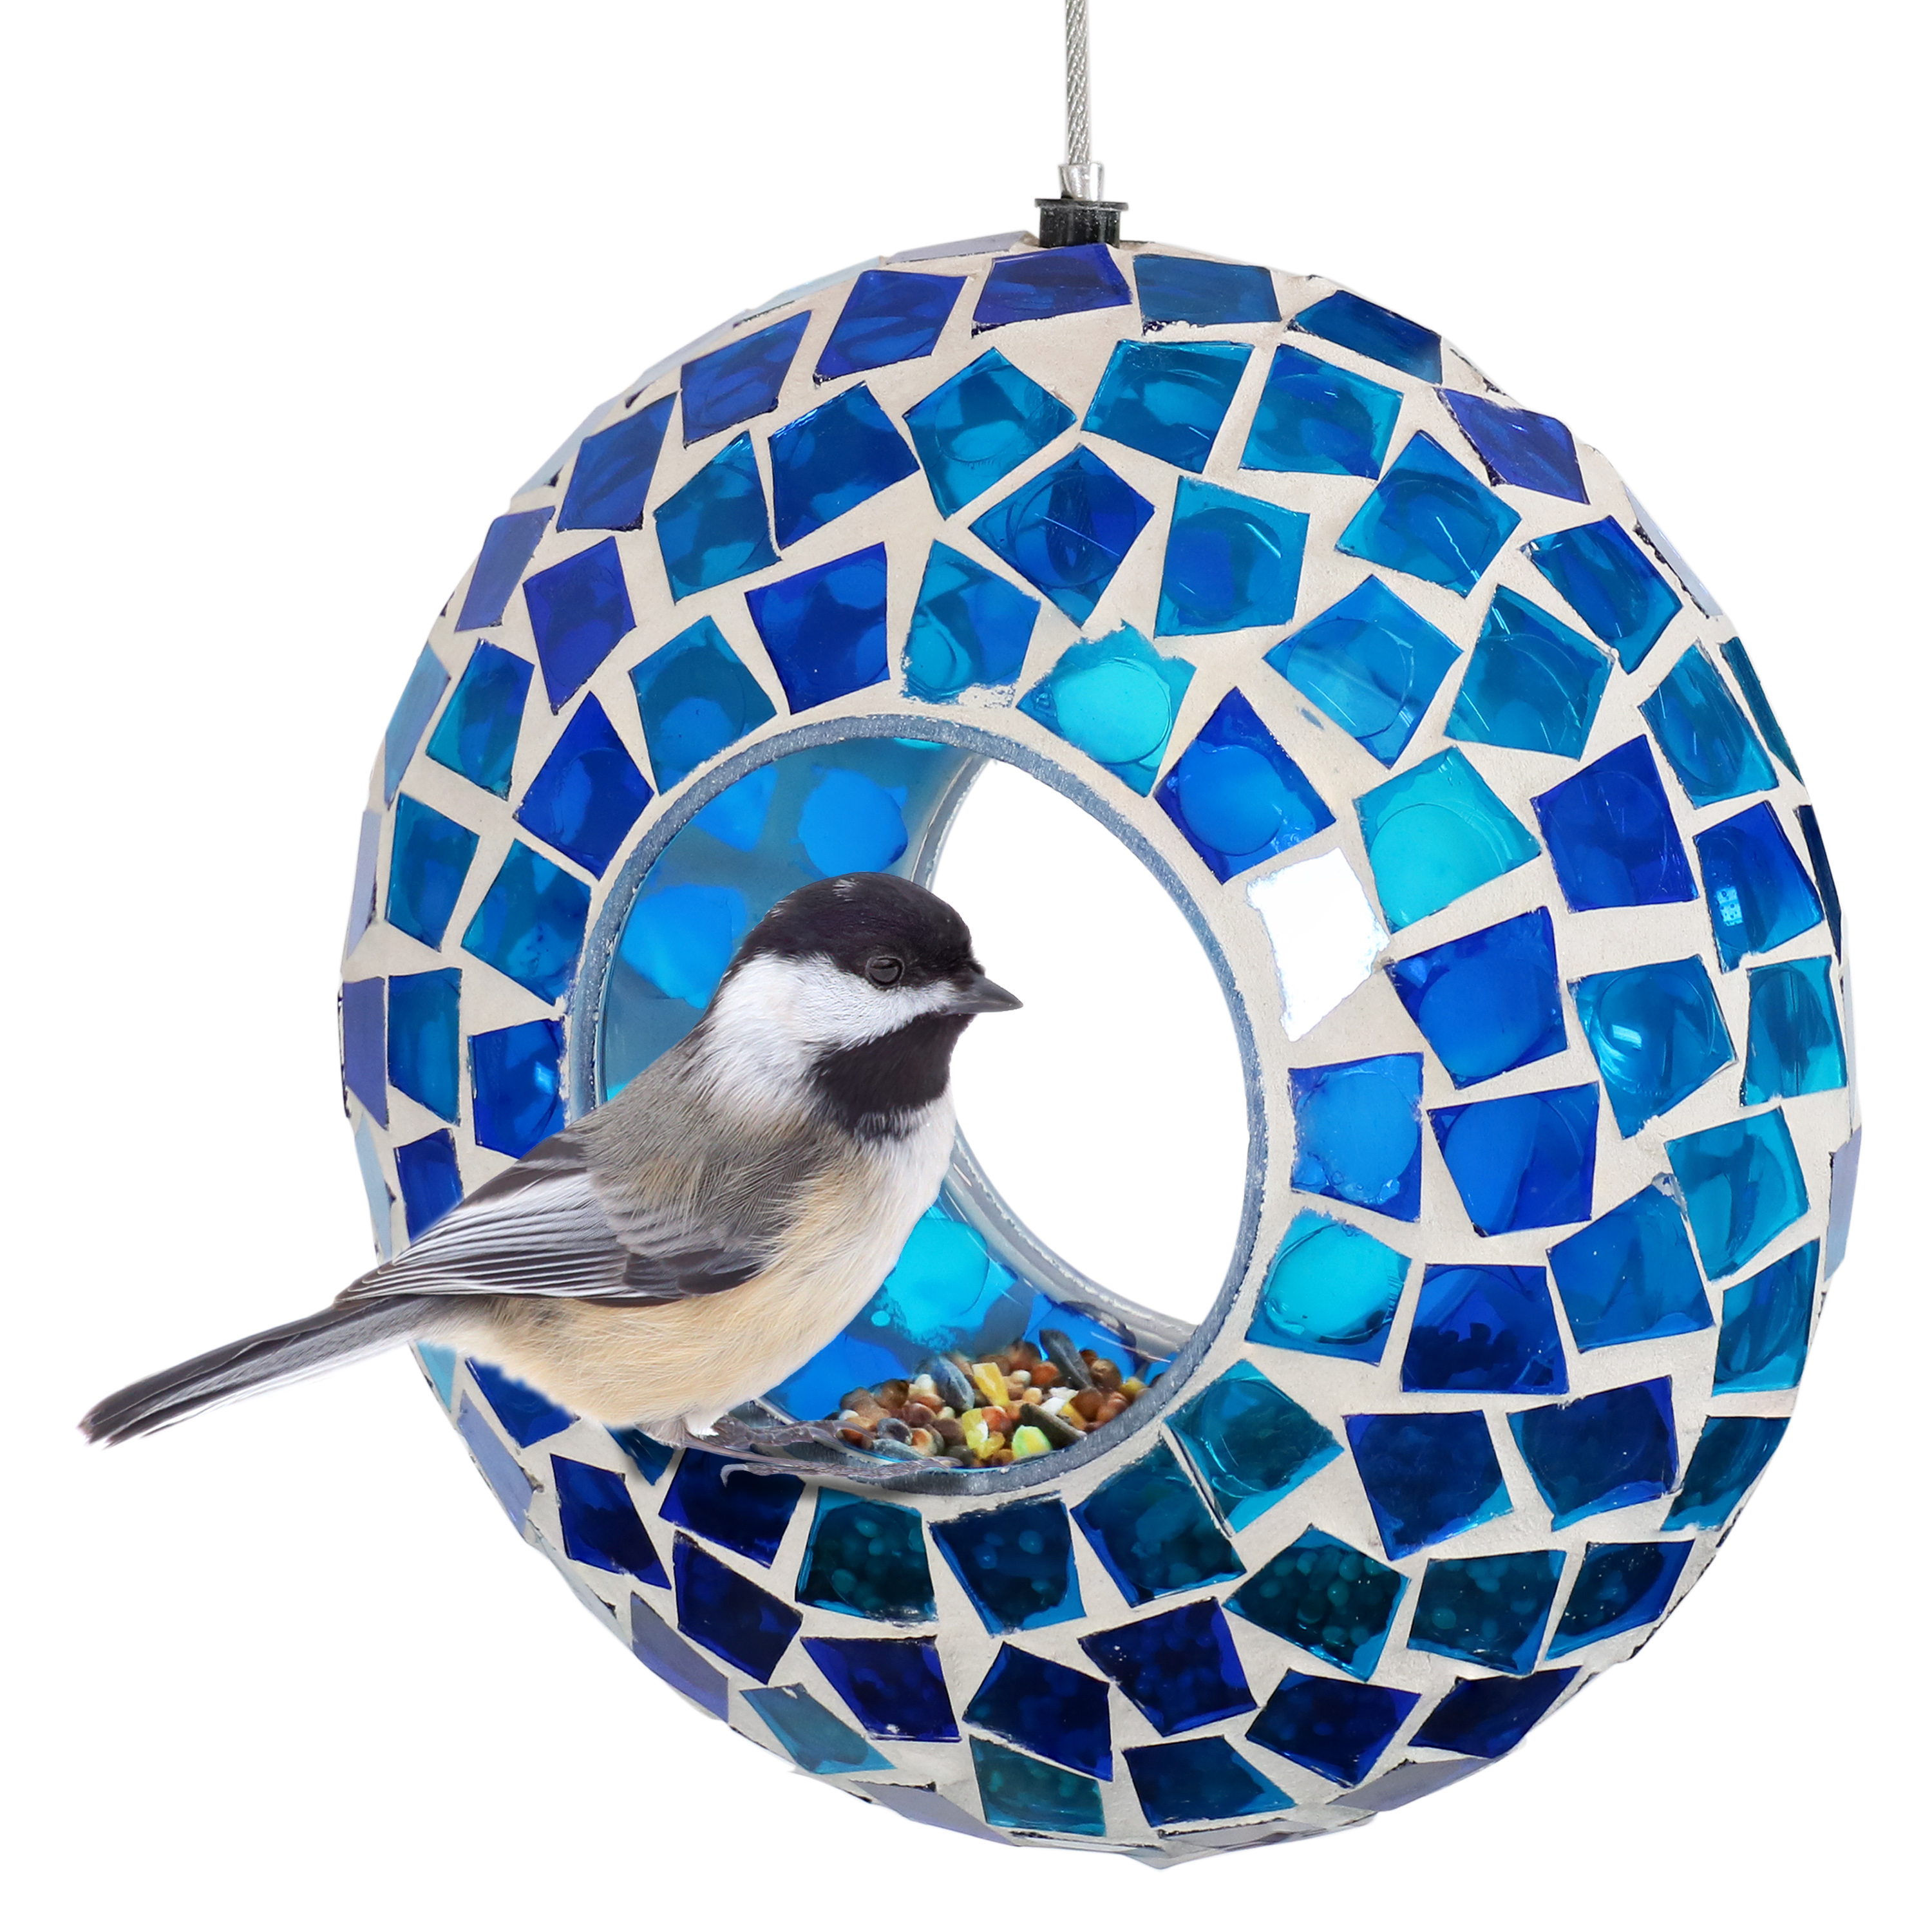 Sunnydaze Blue Mosaic Fly-Through Hanging Outdoor Bird Feeder - 6-Inch